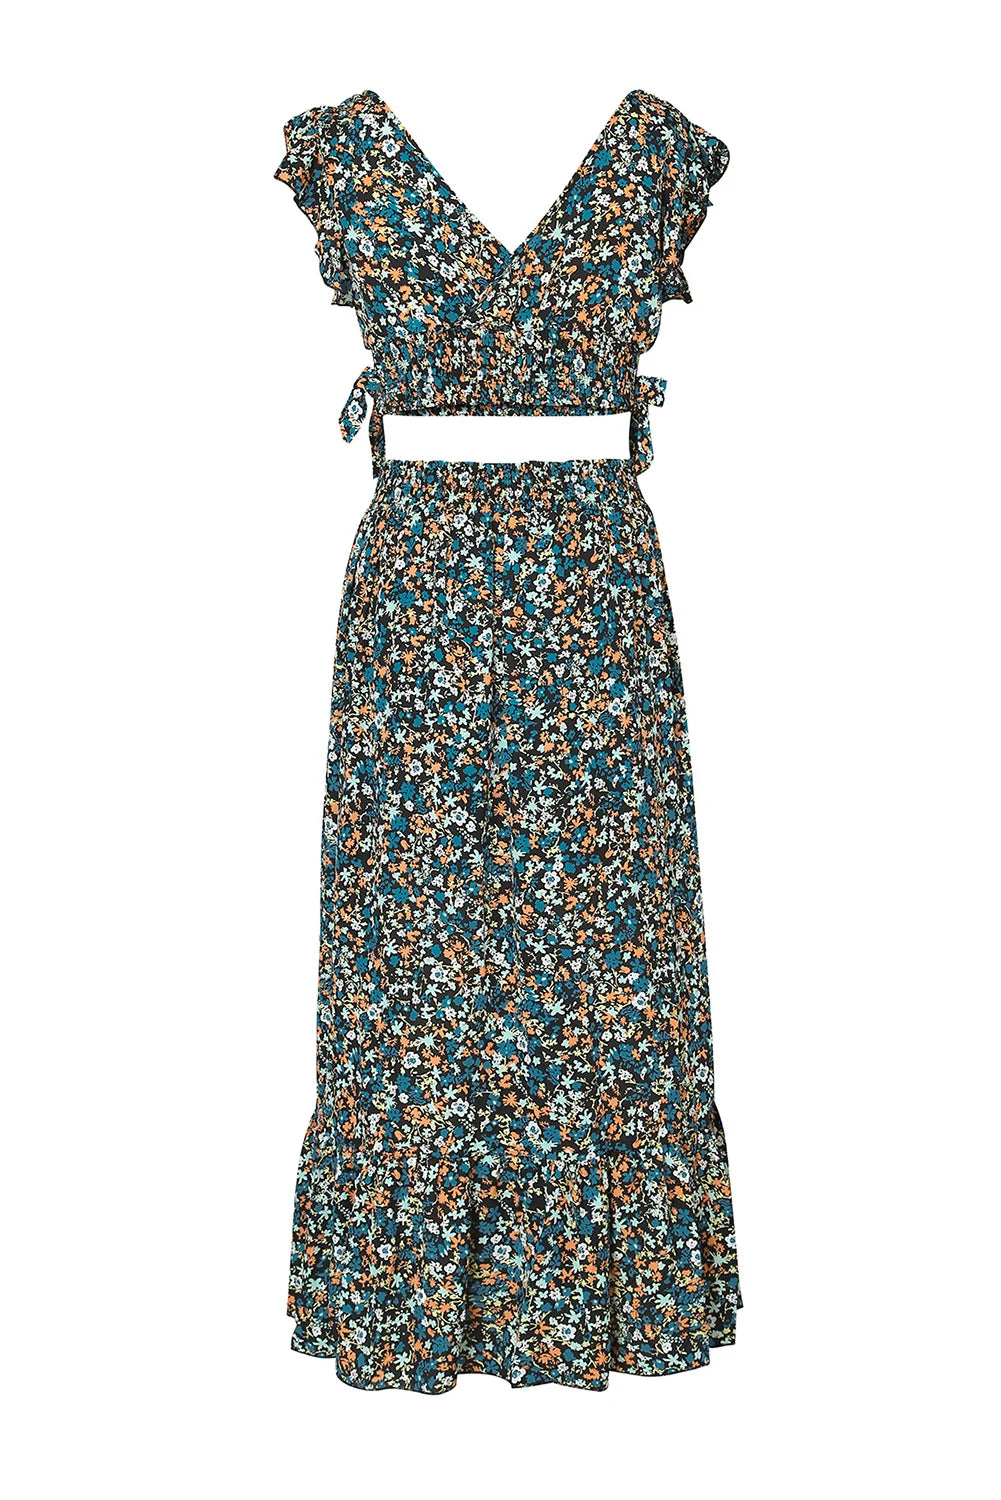 FashionSierra-Casual Floral Print 2 Piece Skirts Set for Women Vintage Deep V Short Sleeve Tops High Waist A-line Skirt Summer 2024 Boho Dress